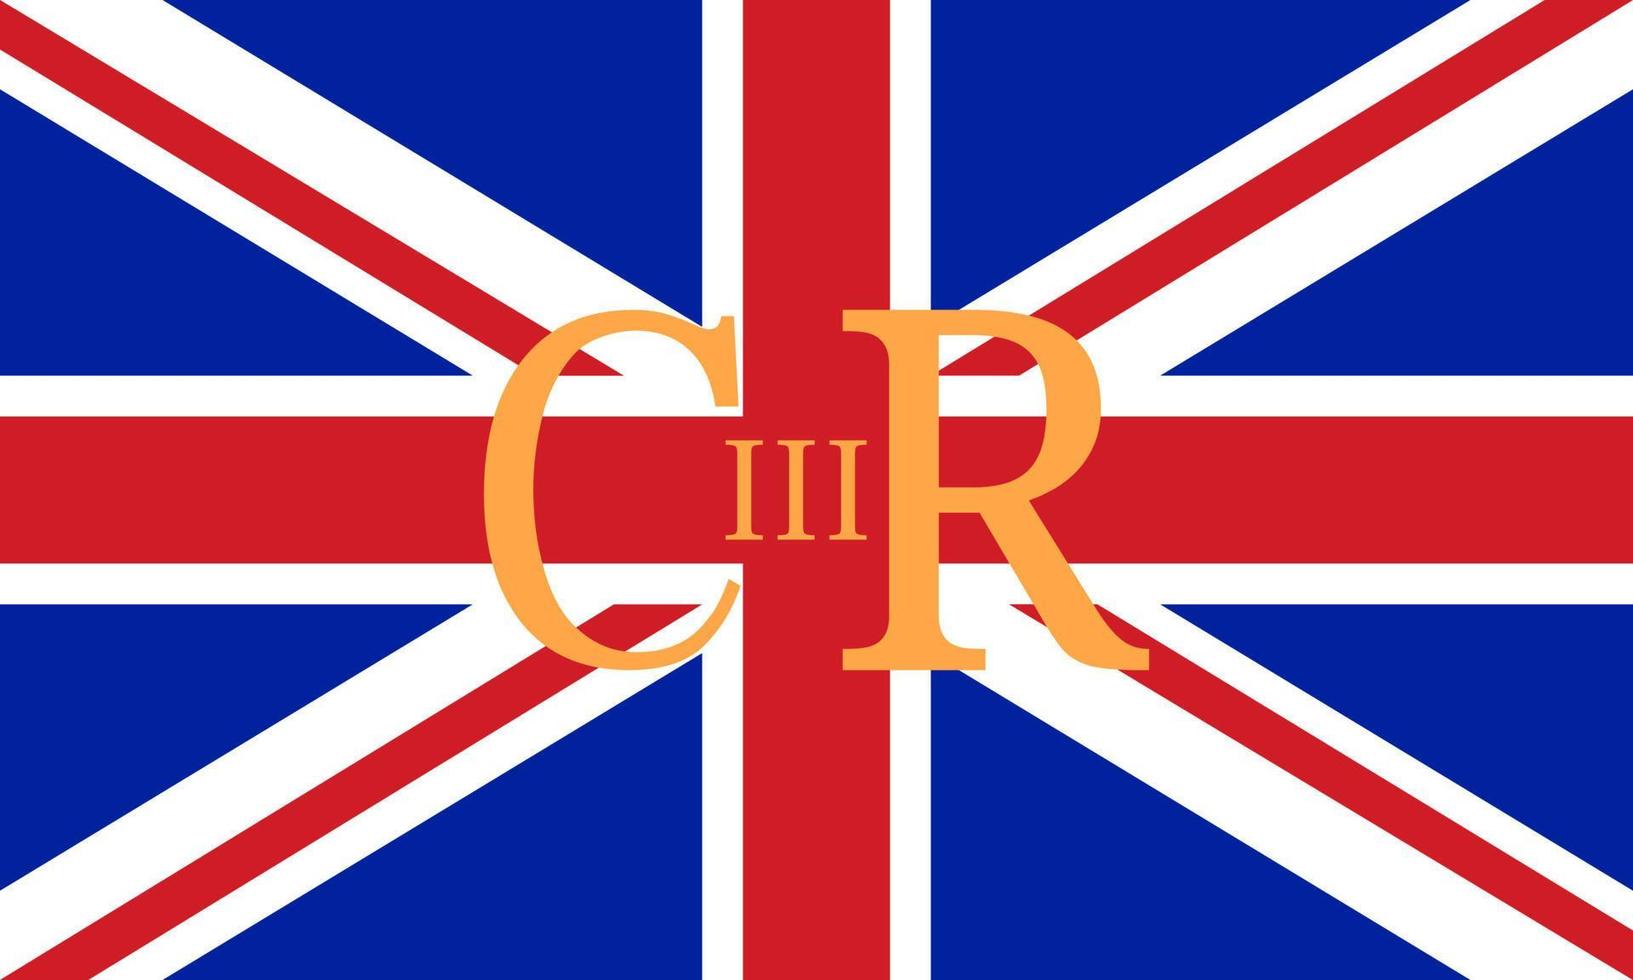 cifra real do rei charles iii na bandeira britânica. novo monarca britânico. príncipe charles de gales torna-se rei da inglaterra. vetor